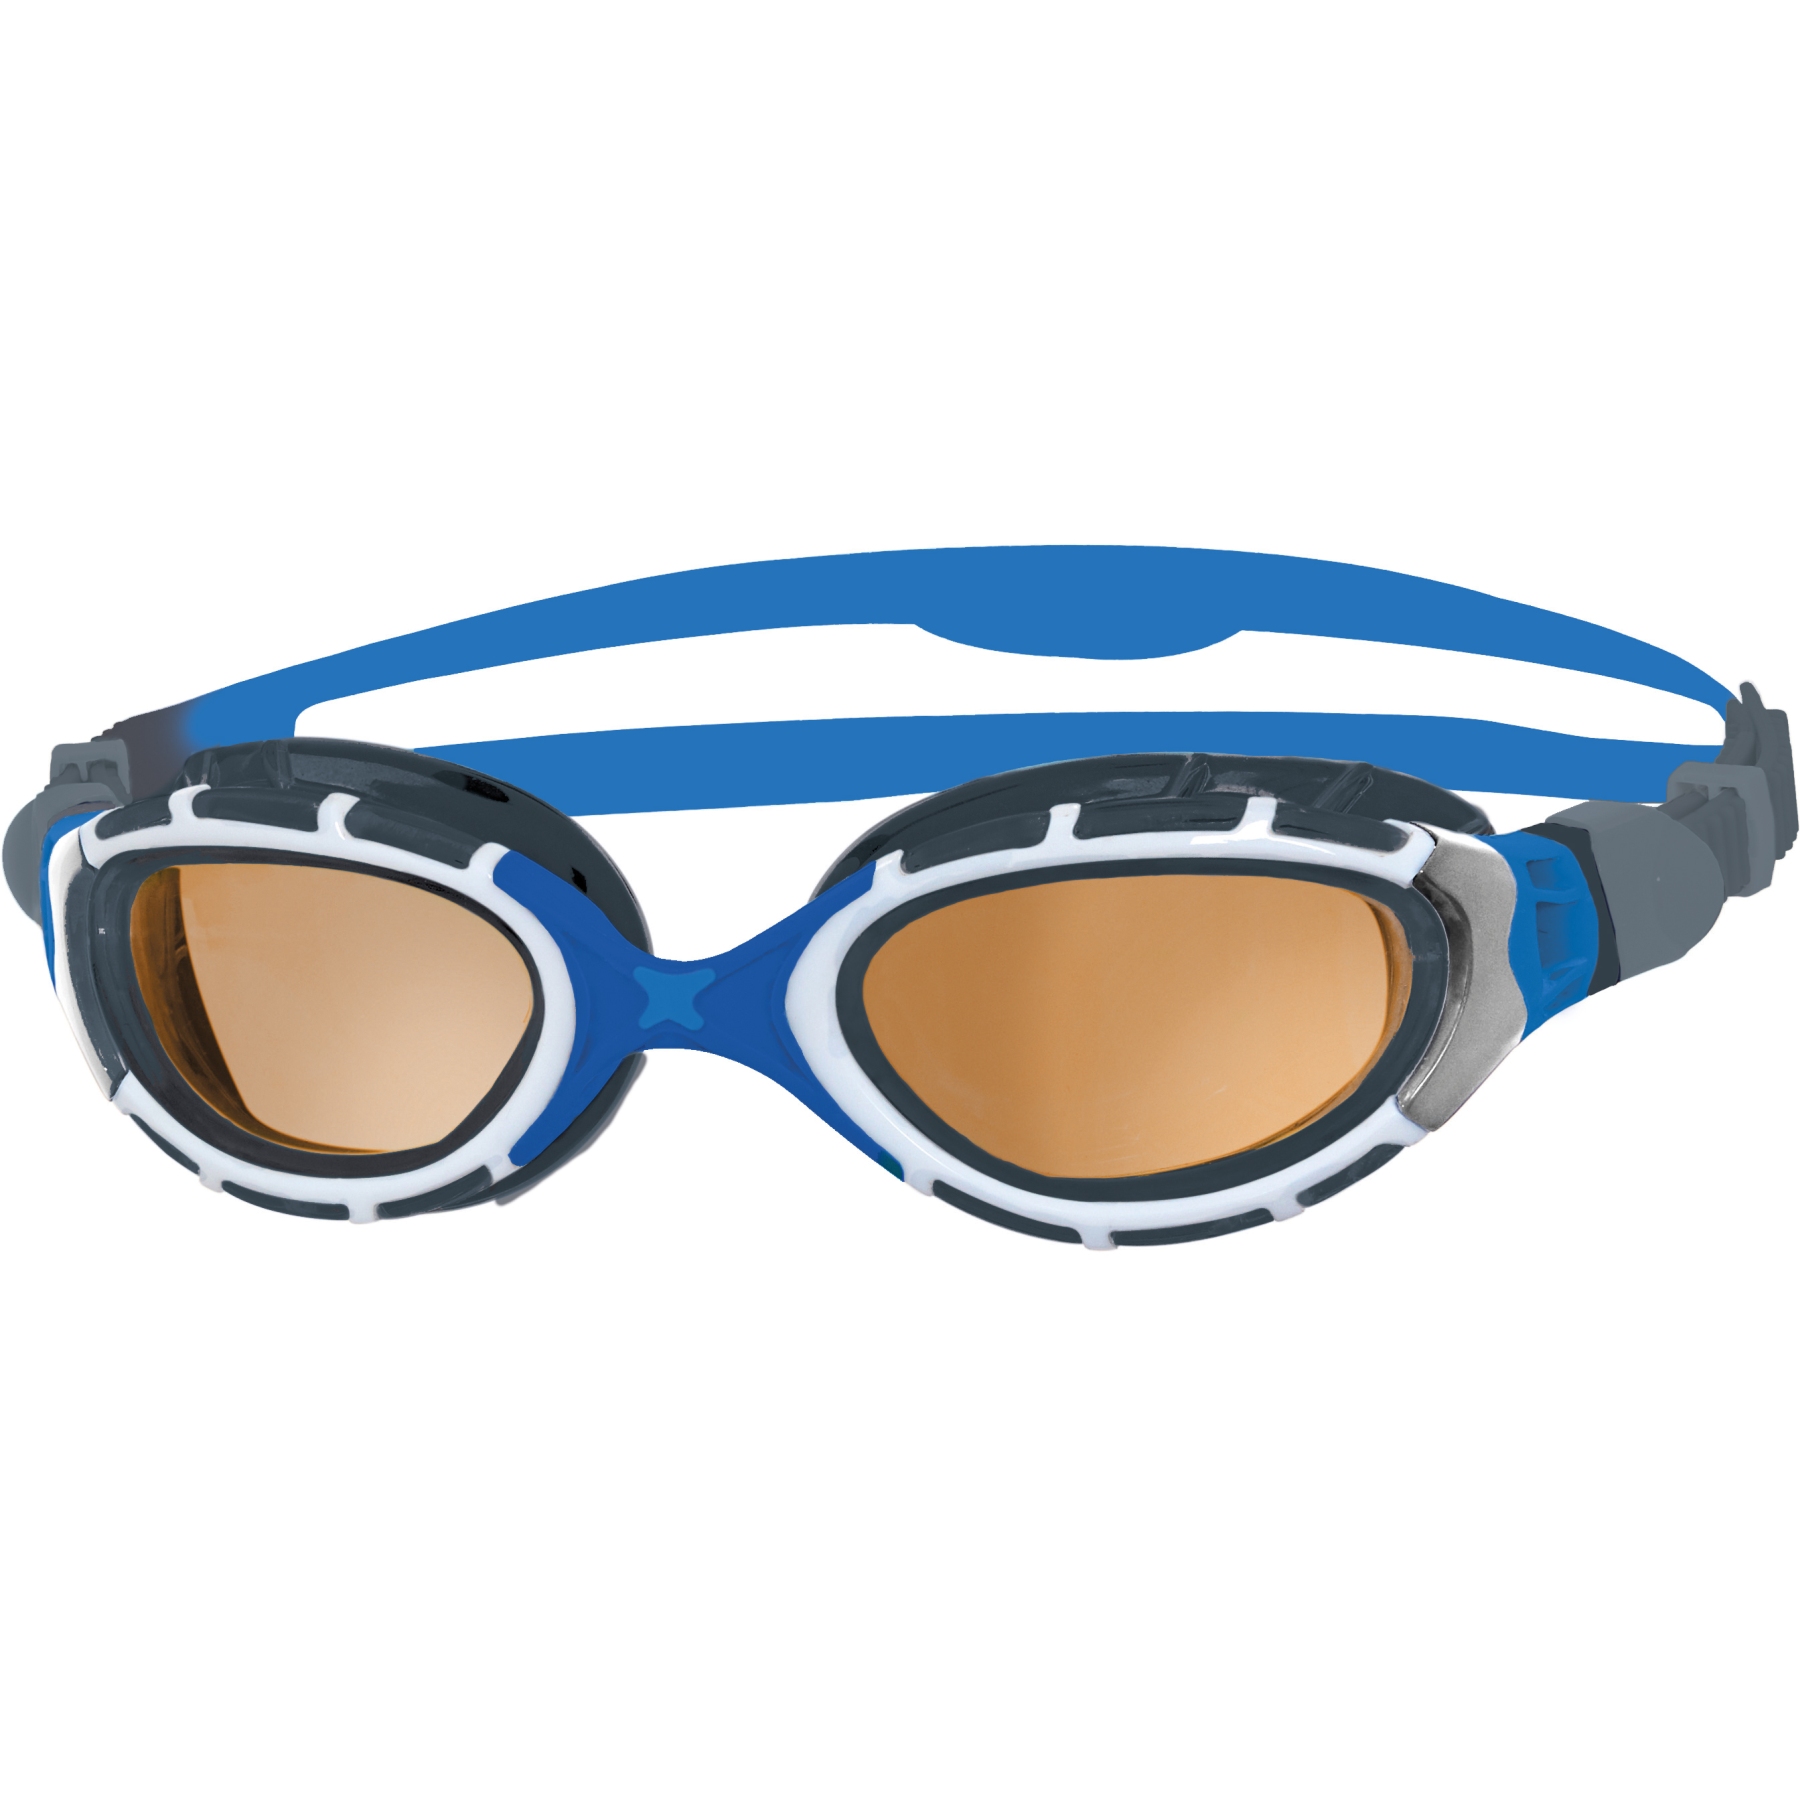 Productfoto van Zoggs Predator Flex Swimming Goggles - Polarized Ultra Copper Lenses - Small Fit - Blue/Grey